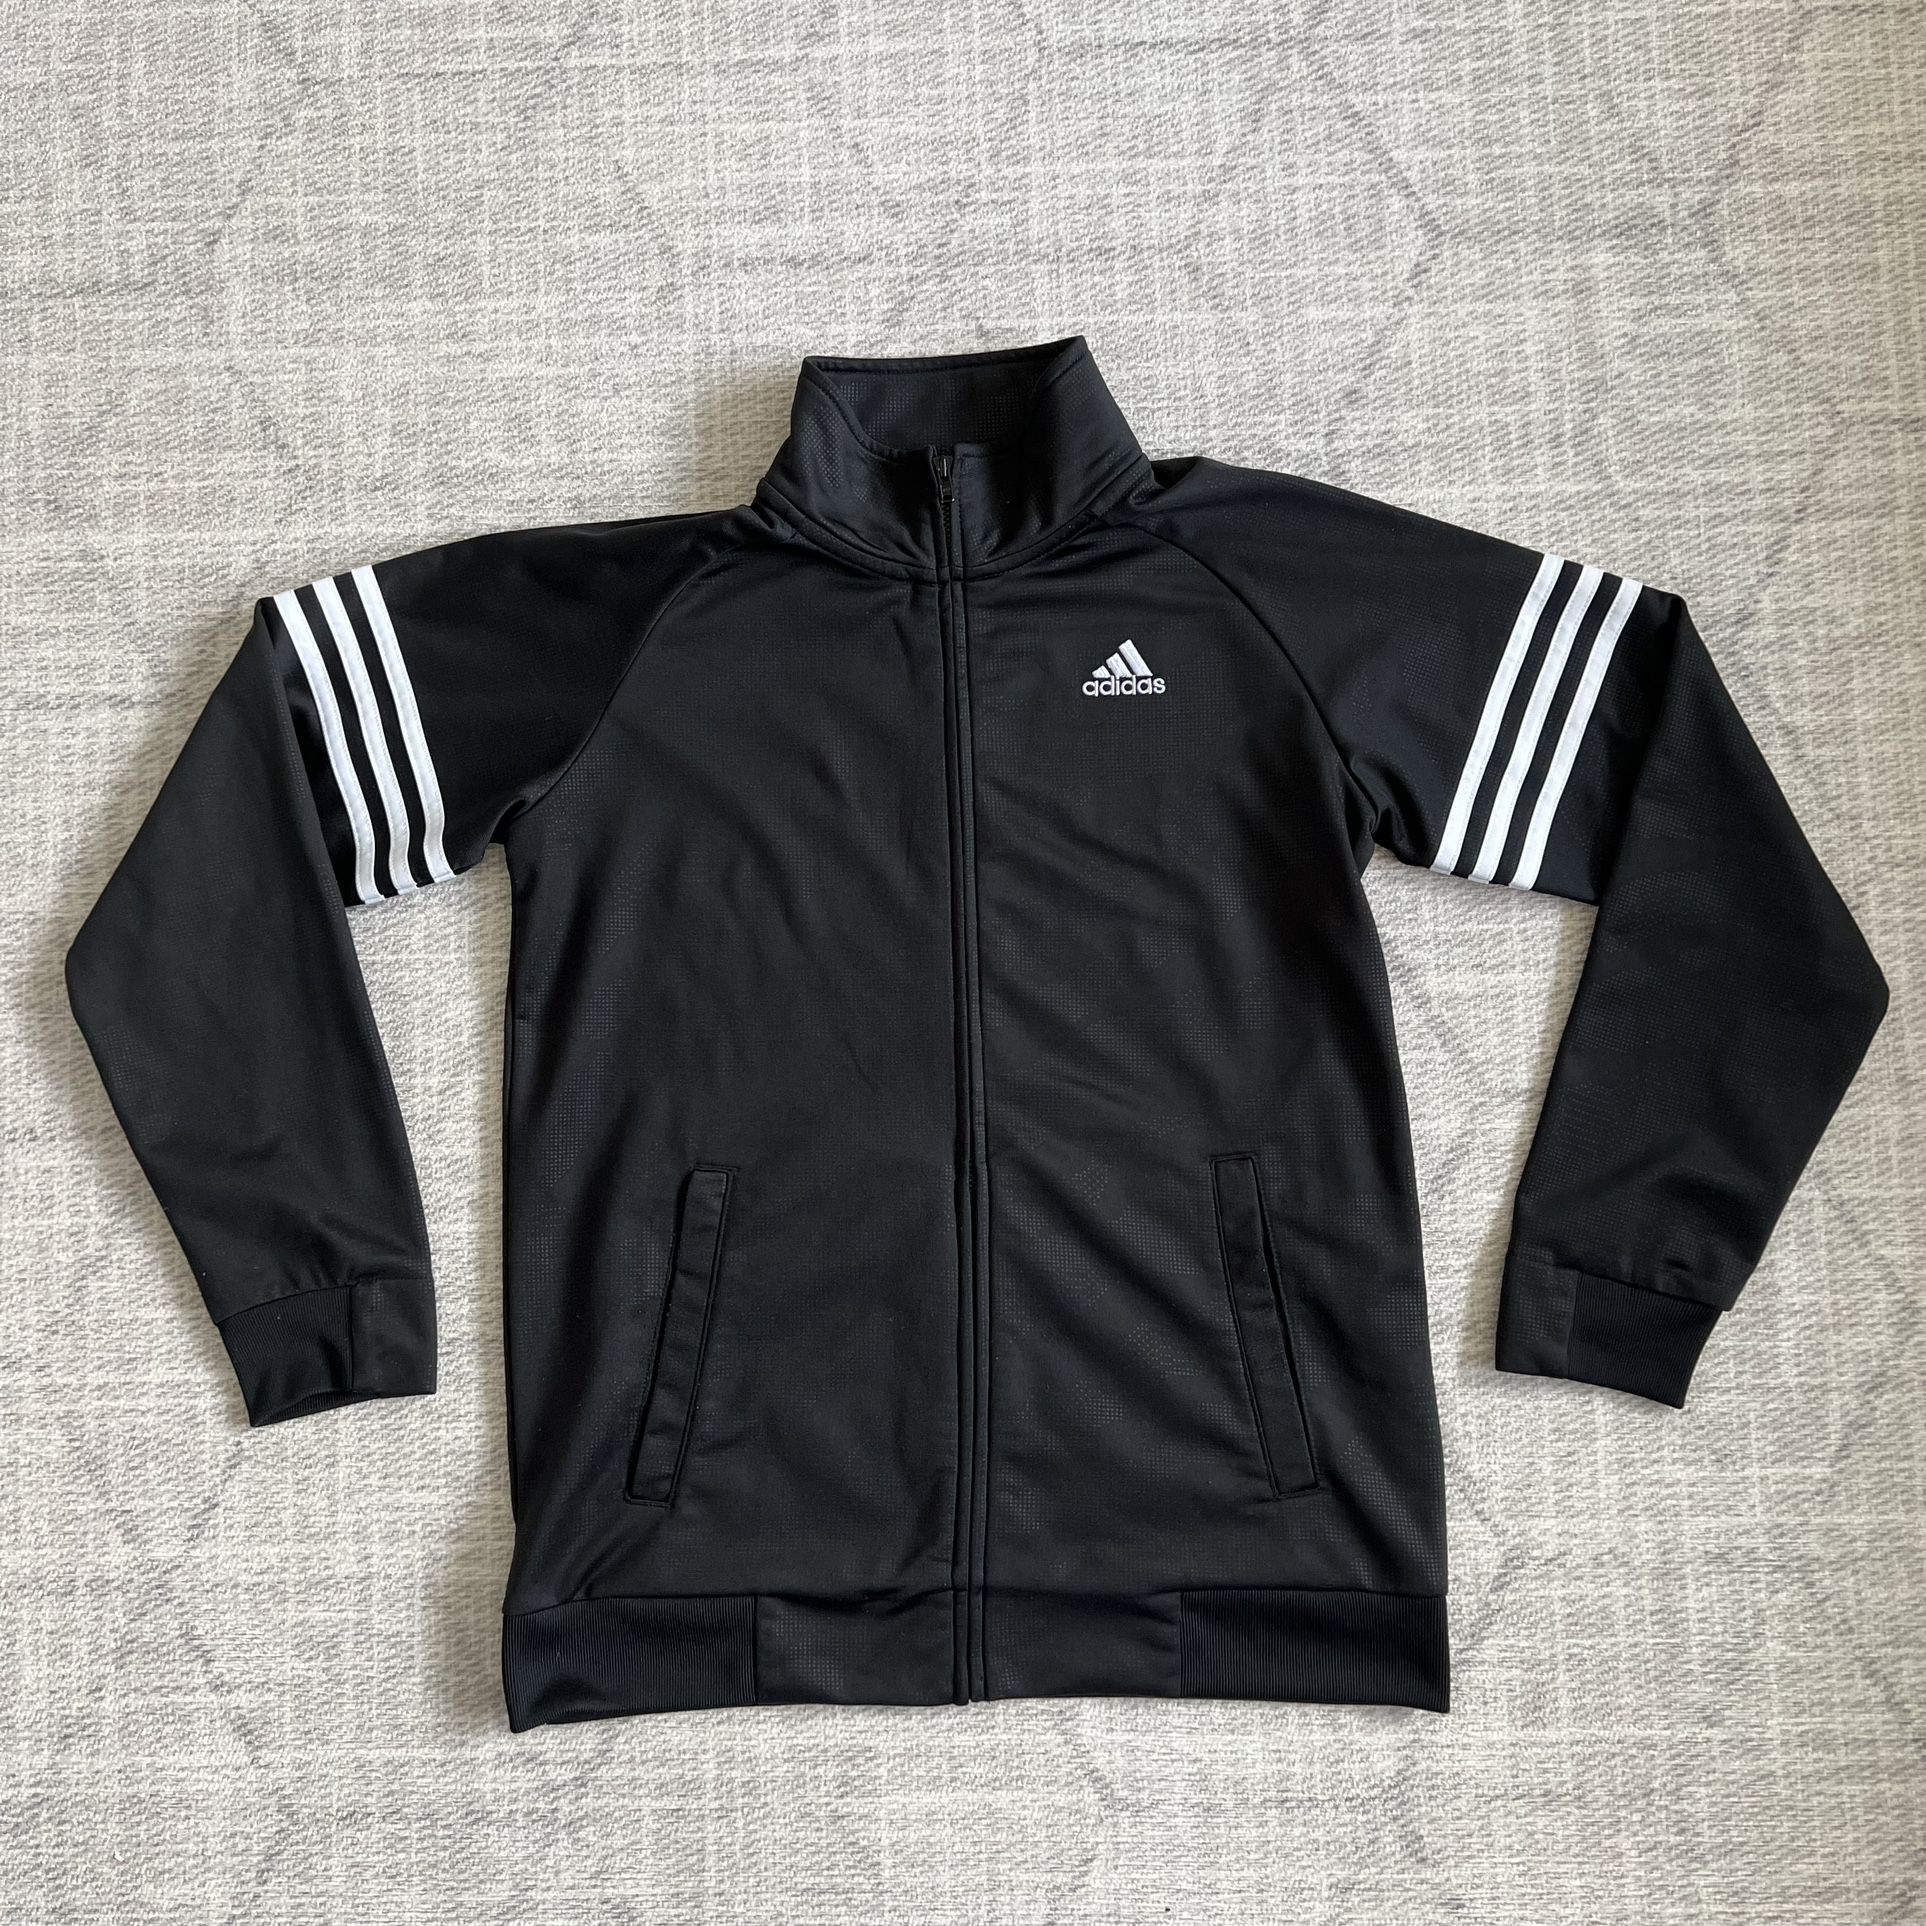 Adidas Youth Athletic Gym Soccer Black Zip Up Jacket